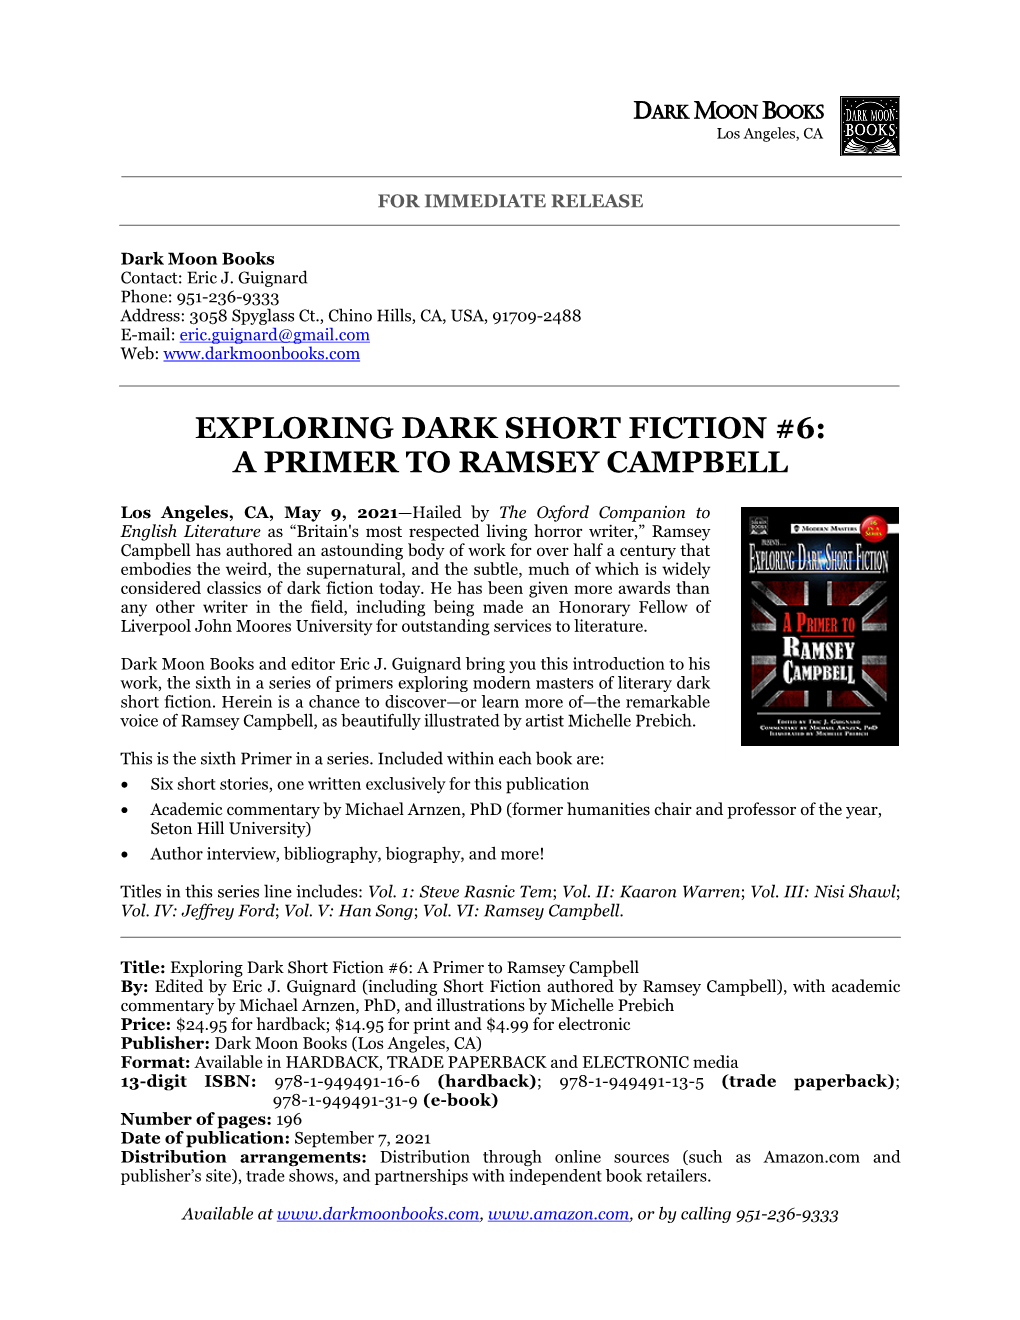 Exploring Dark Short Fiction #6: a Primer to Ramsey Campbell